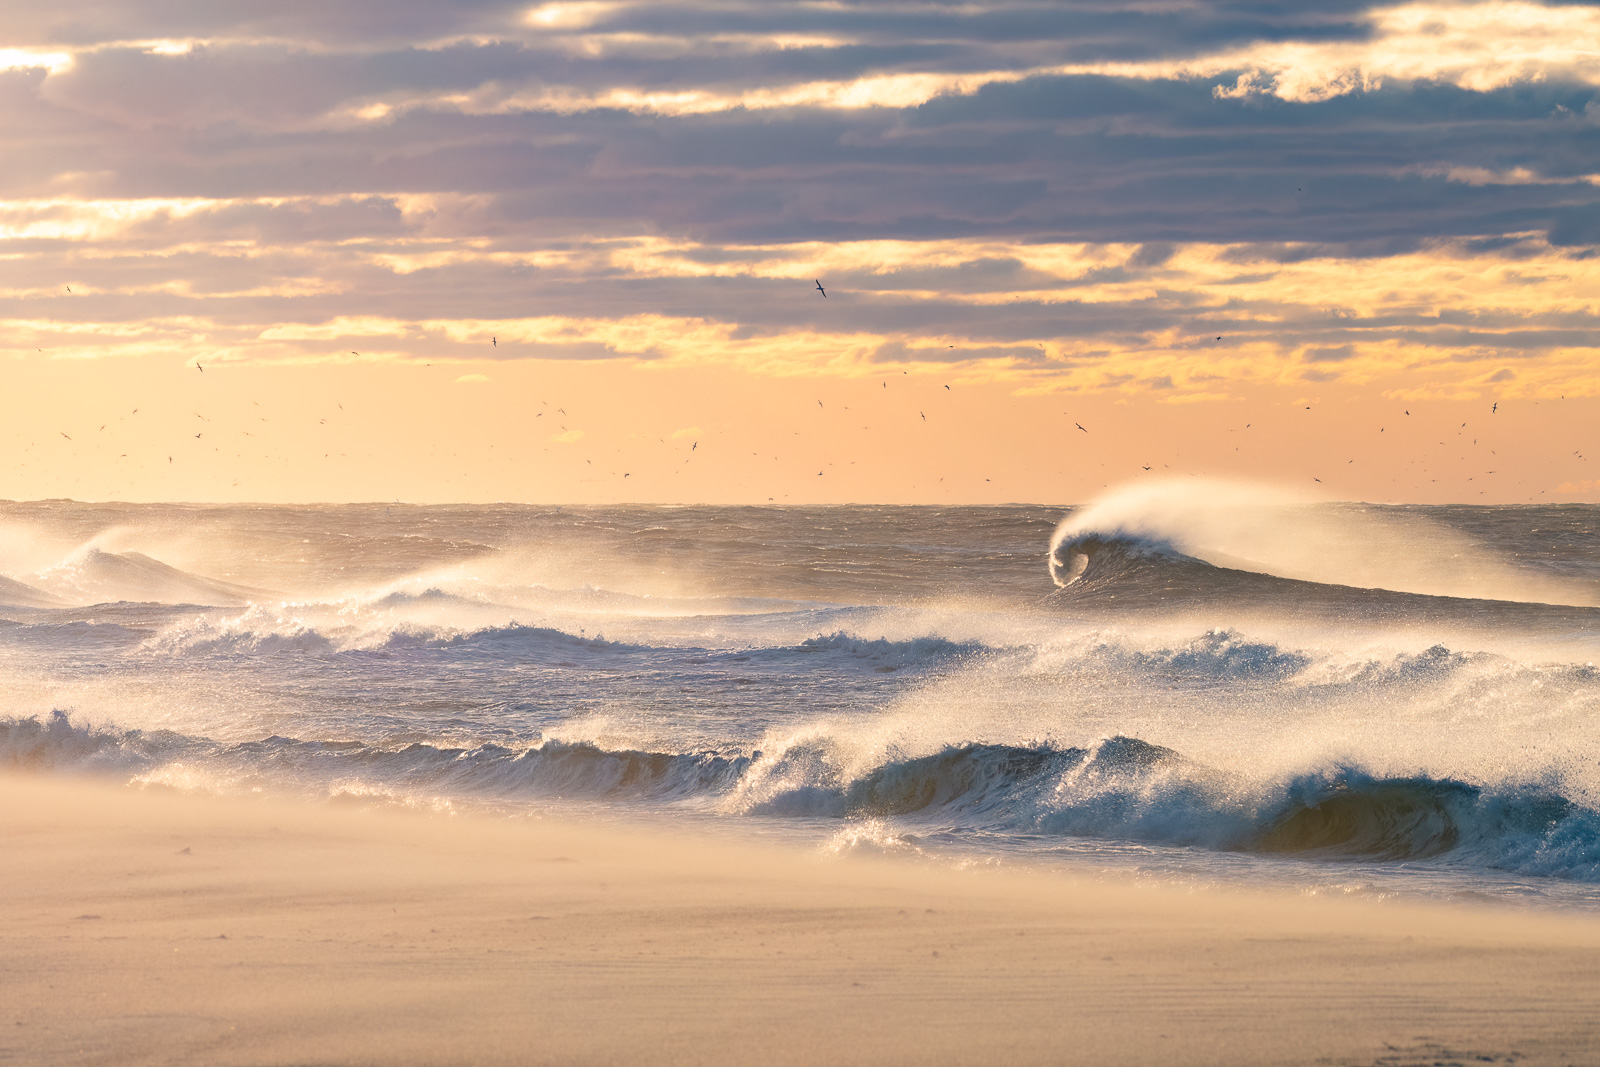 A dramatic wave at sunrise.